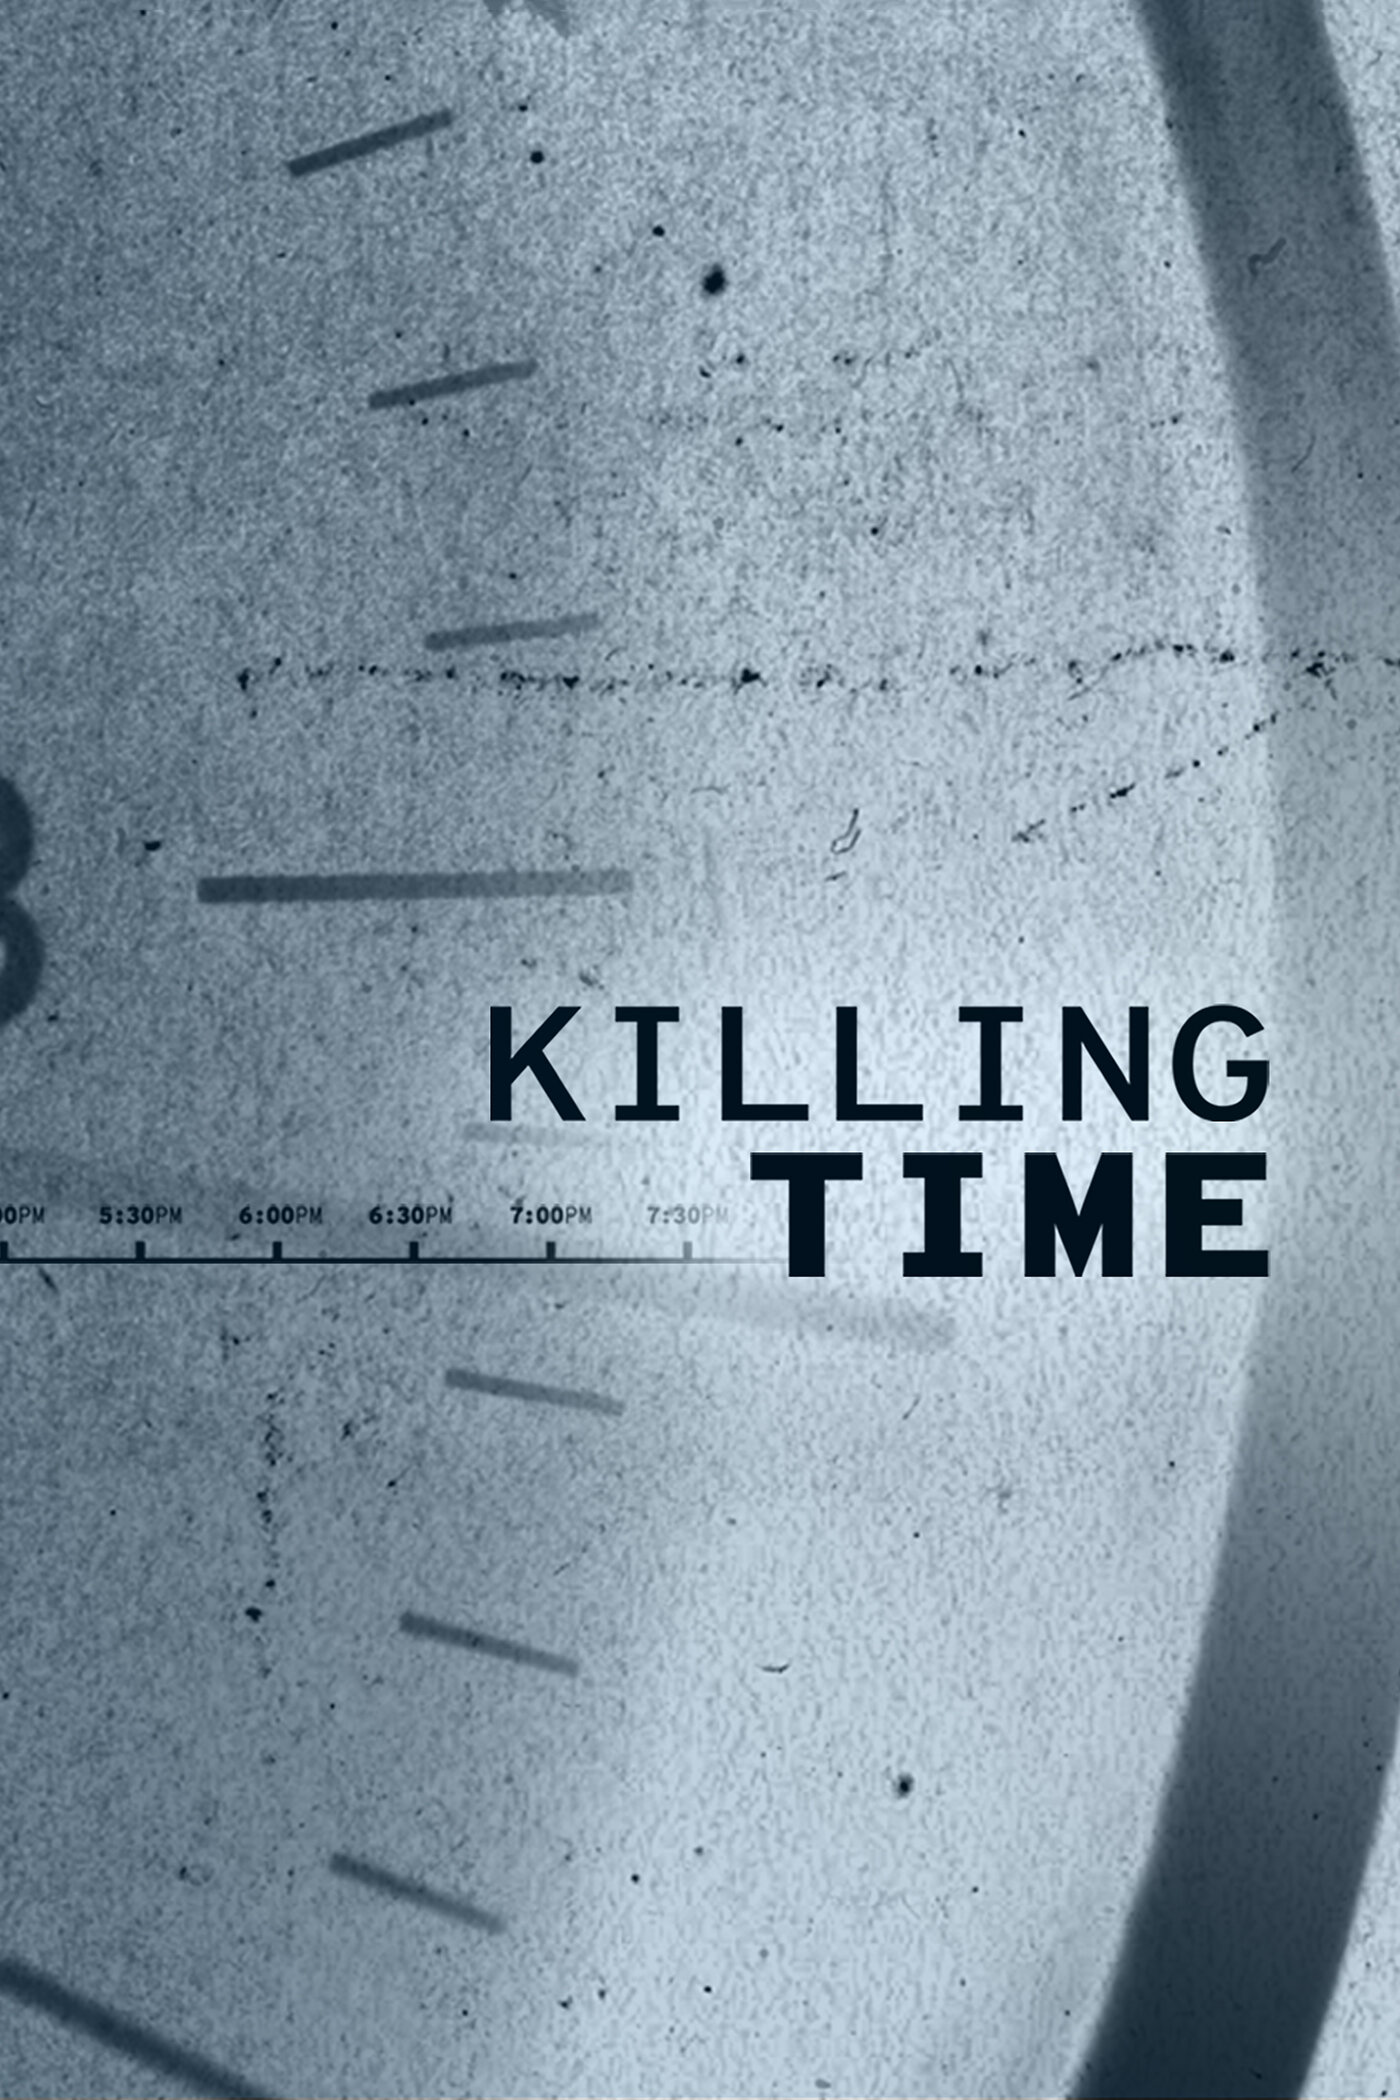 Time killer. Killing time movie. Картинка time Kill..